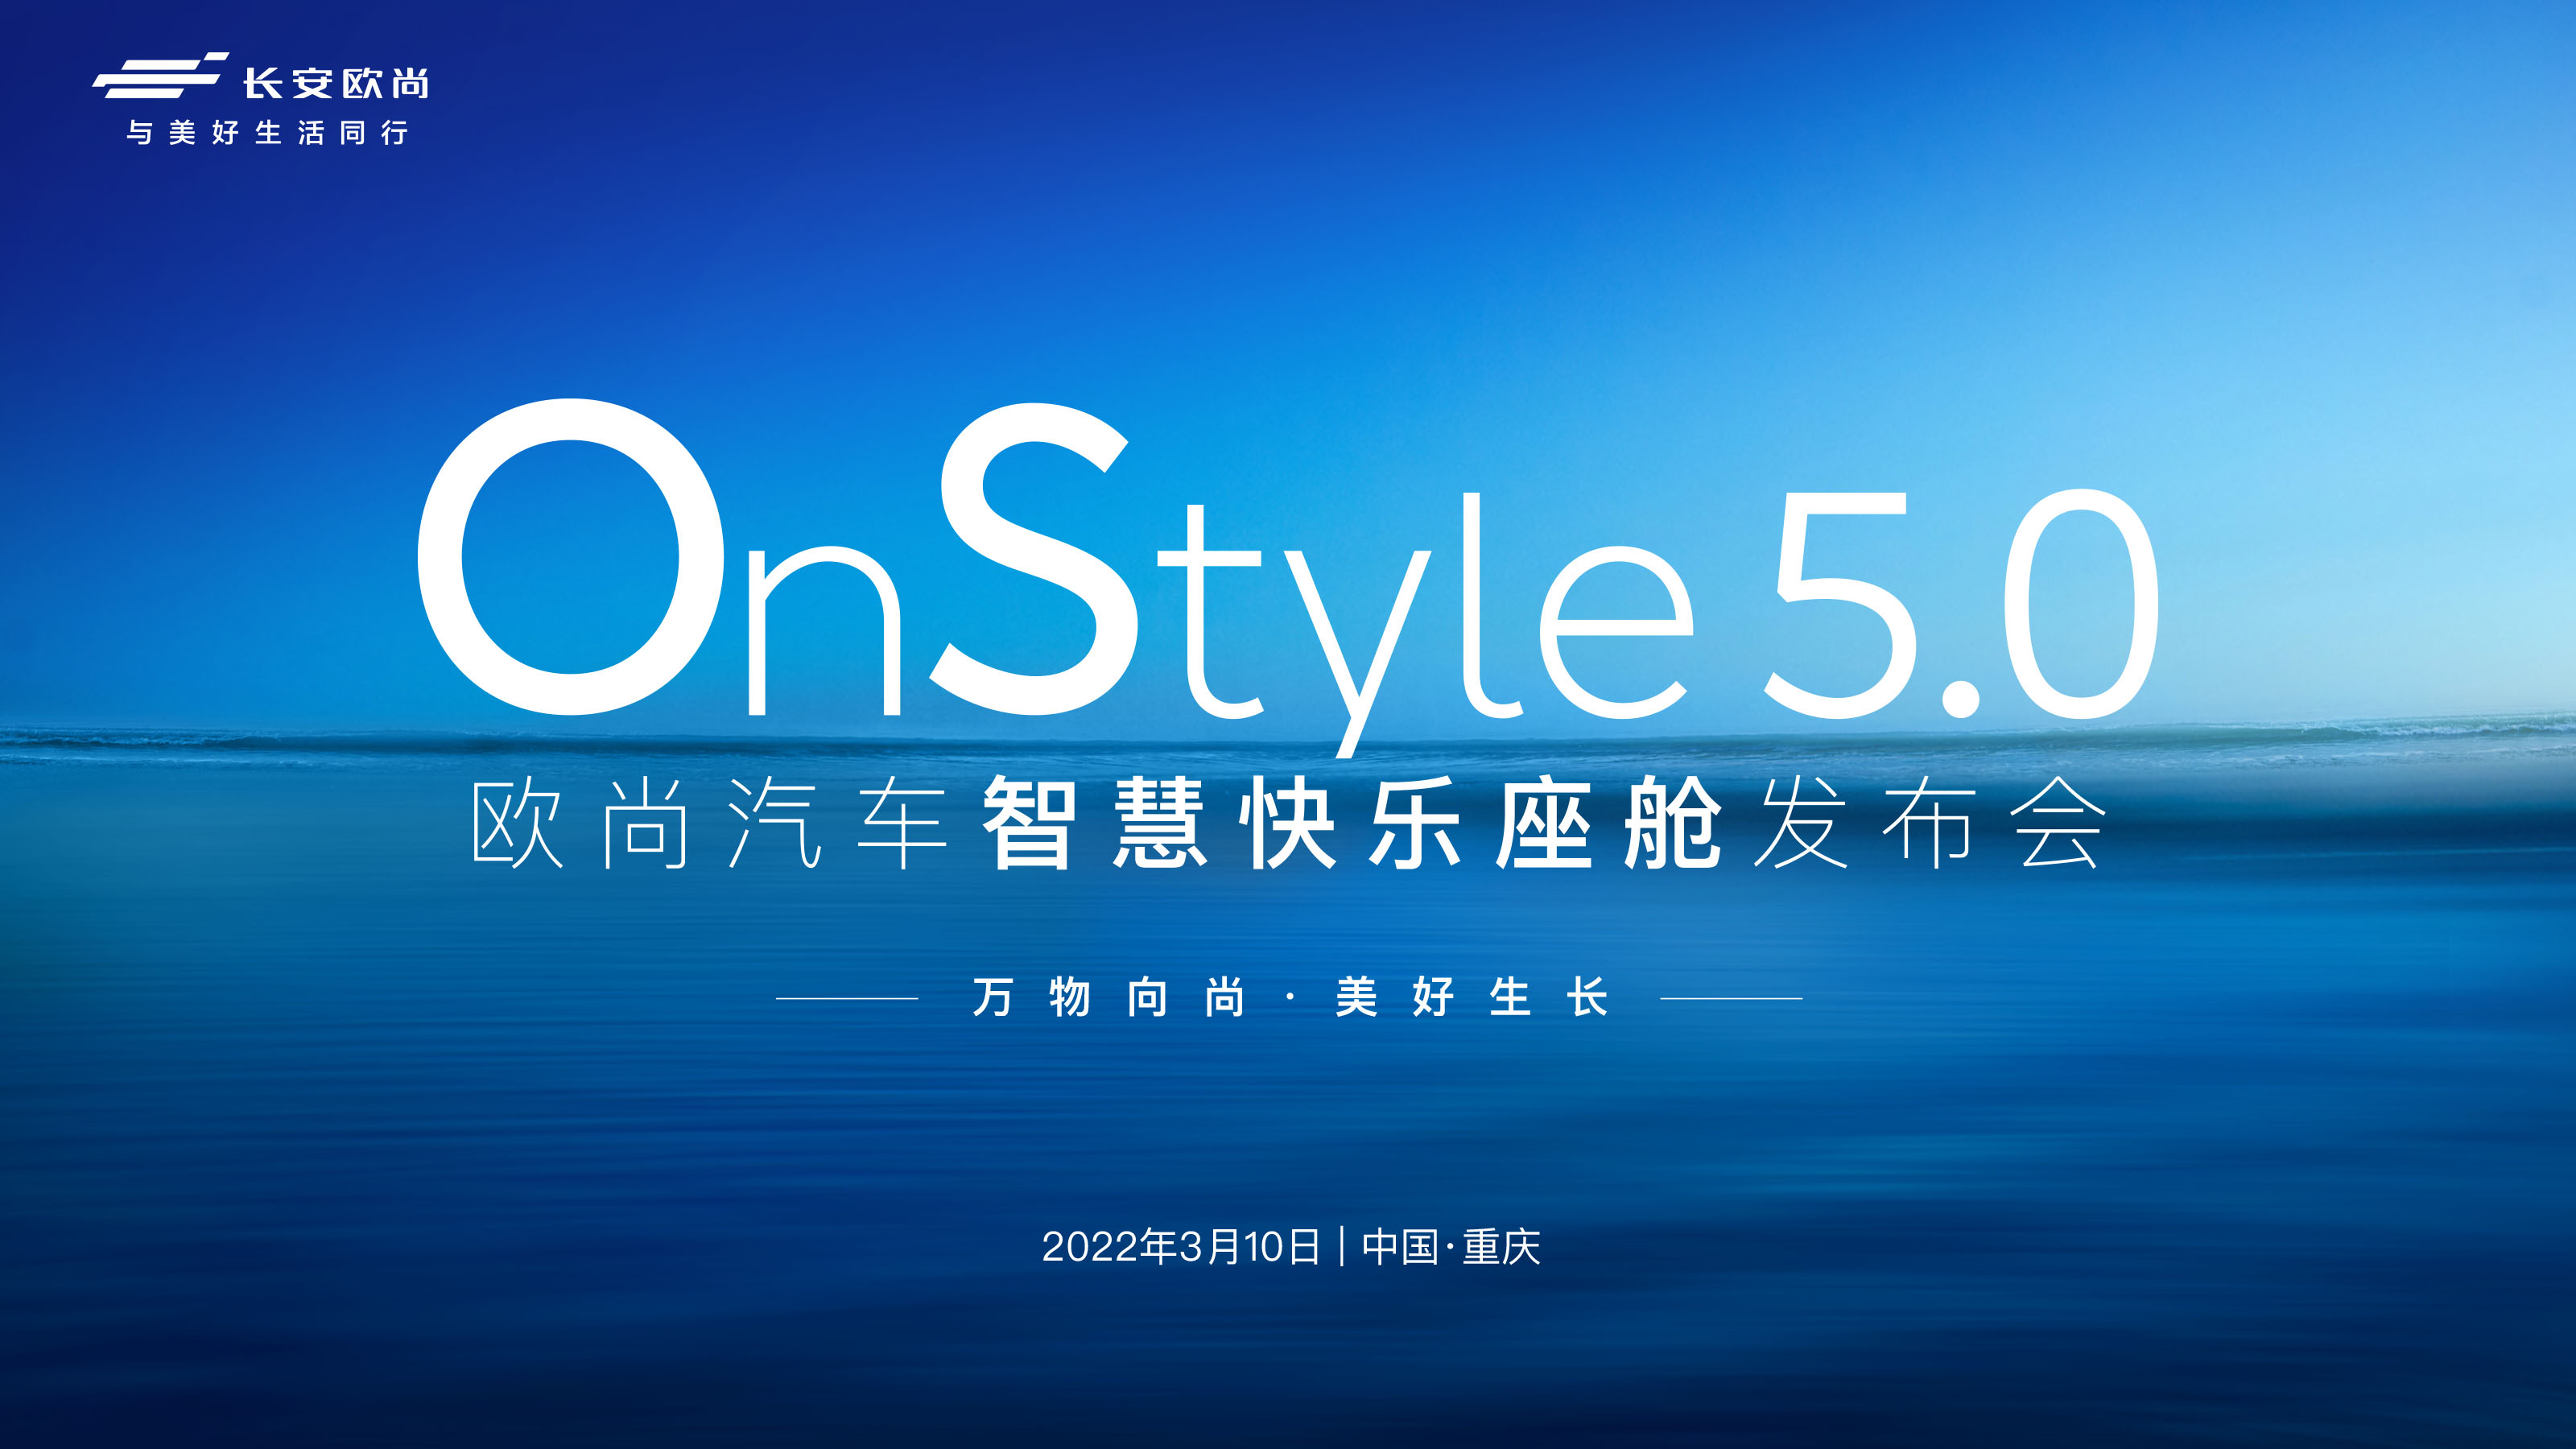 OnStyle5.0欧尚汽车智慧快乐座舱发布——万物向尚·美好生长